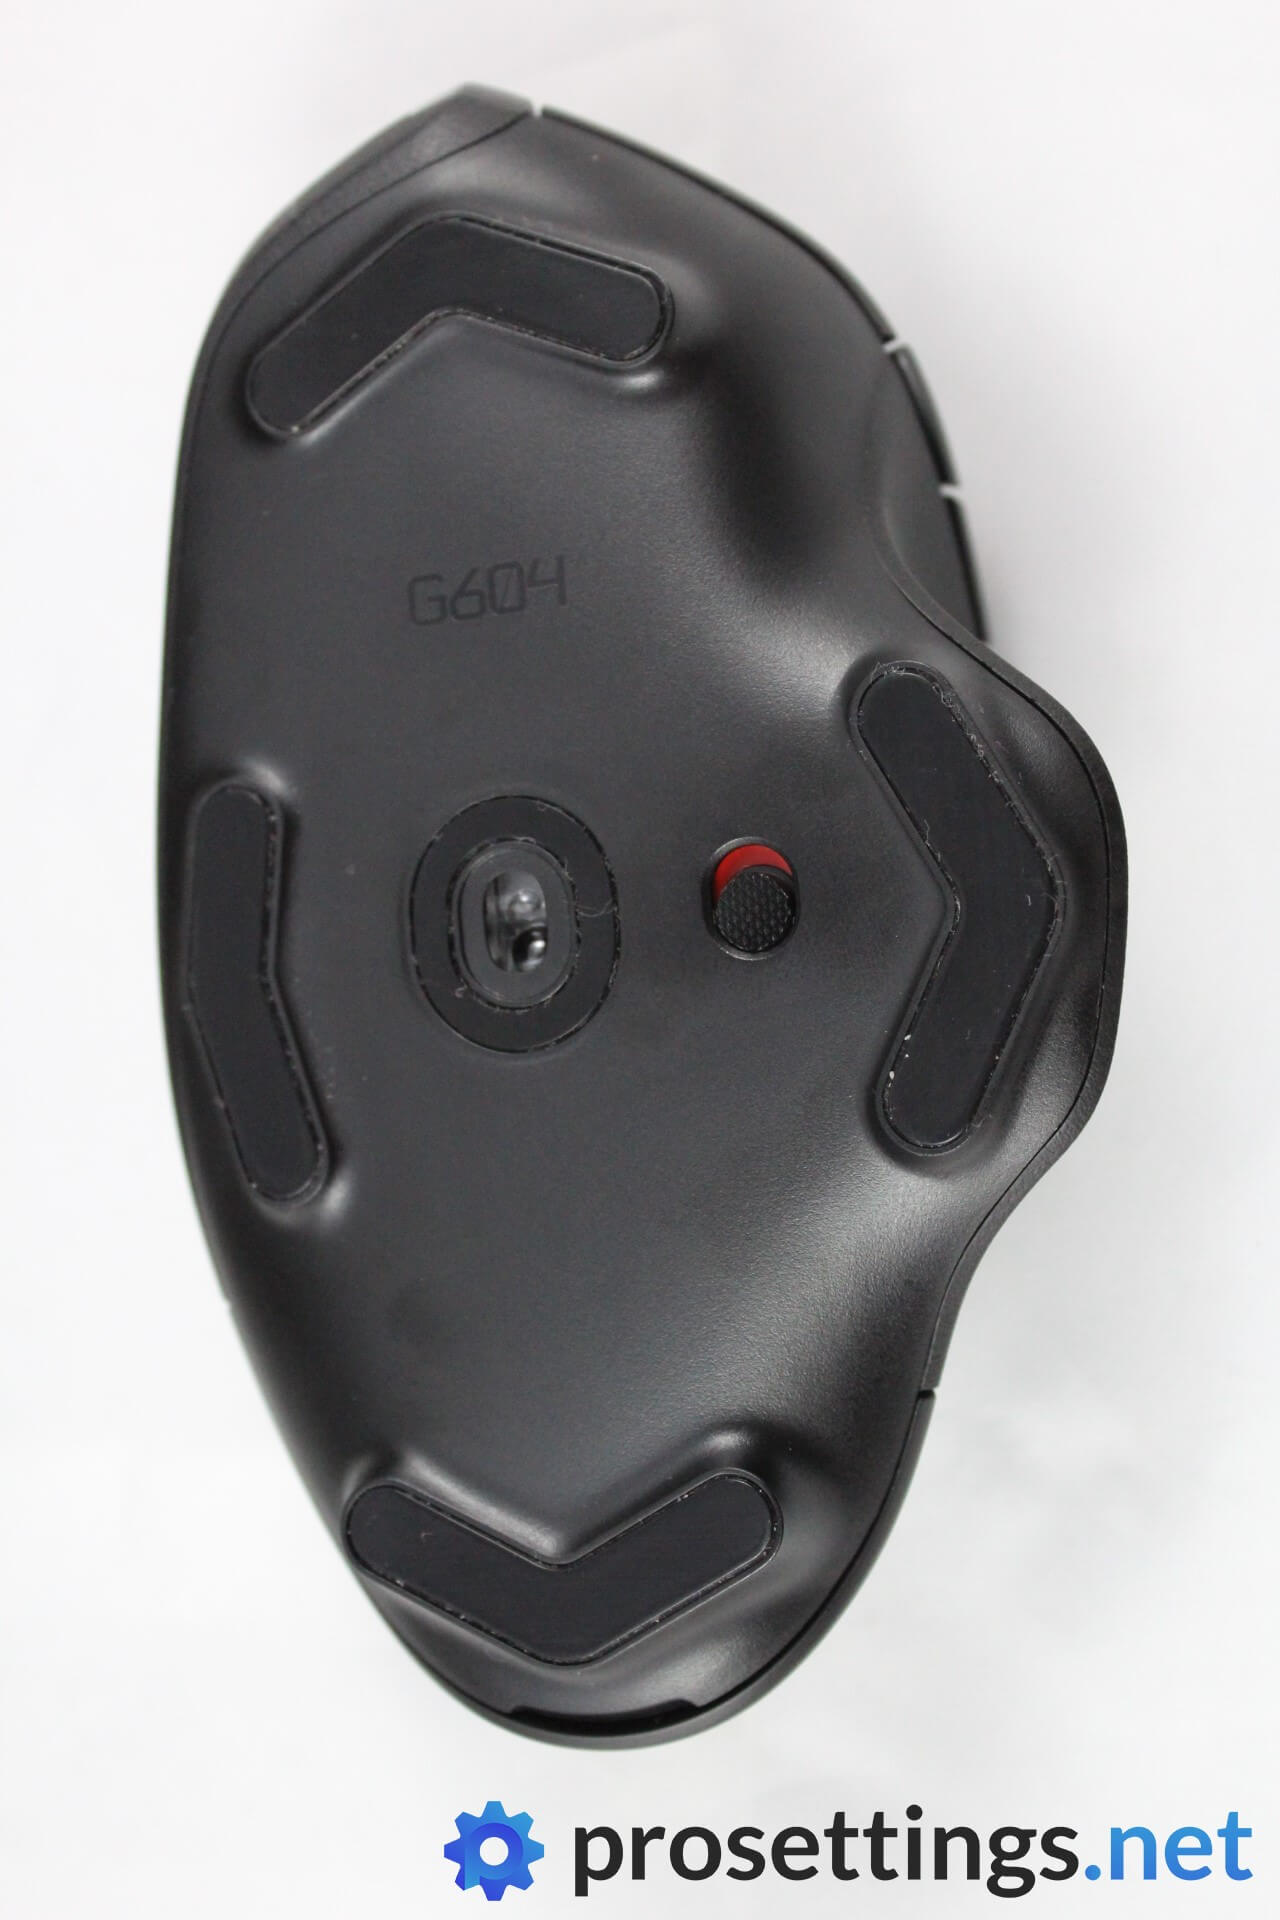 Logitech G604 Review Sensor